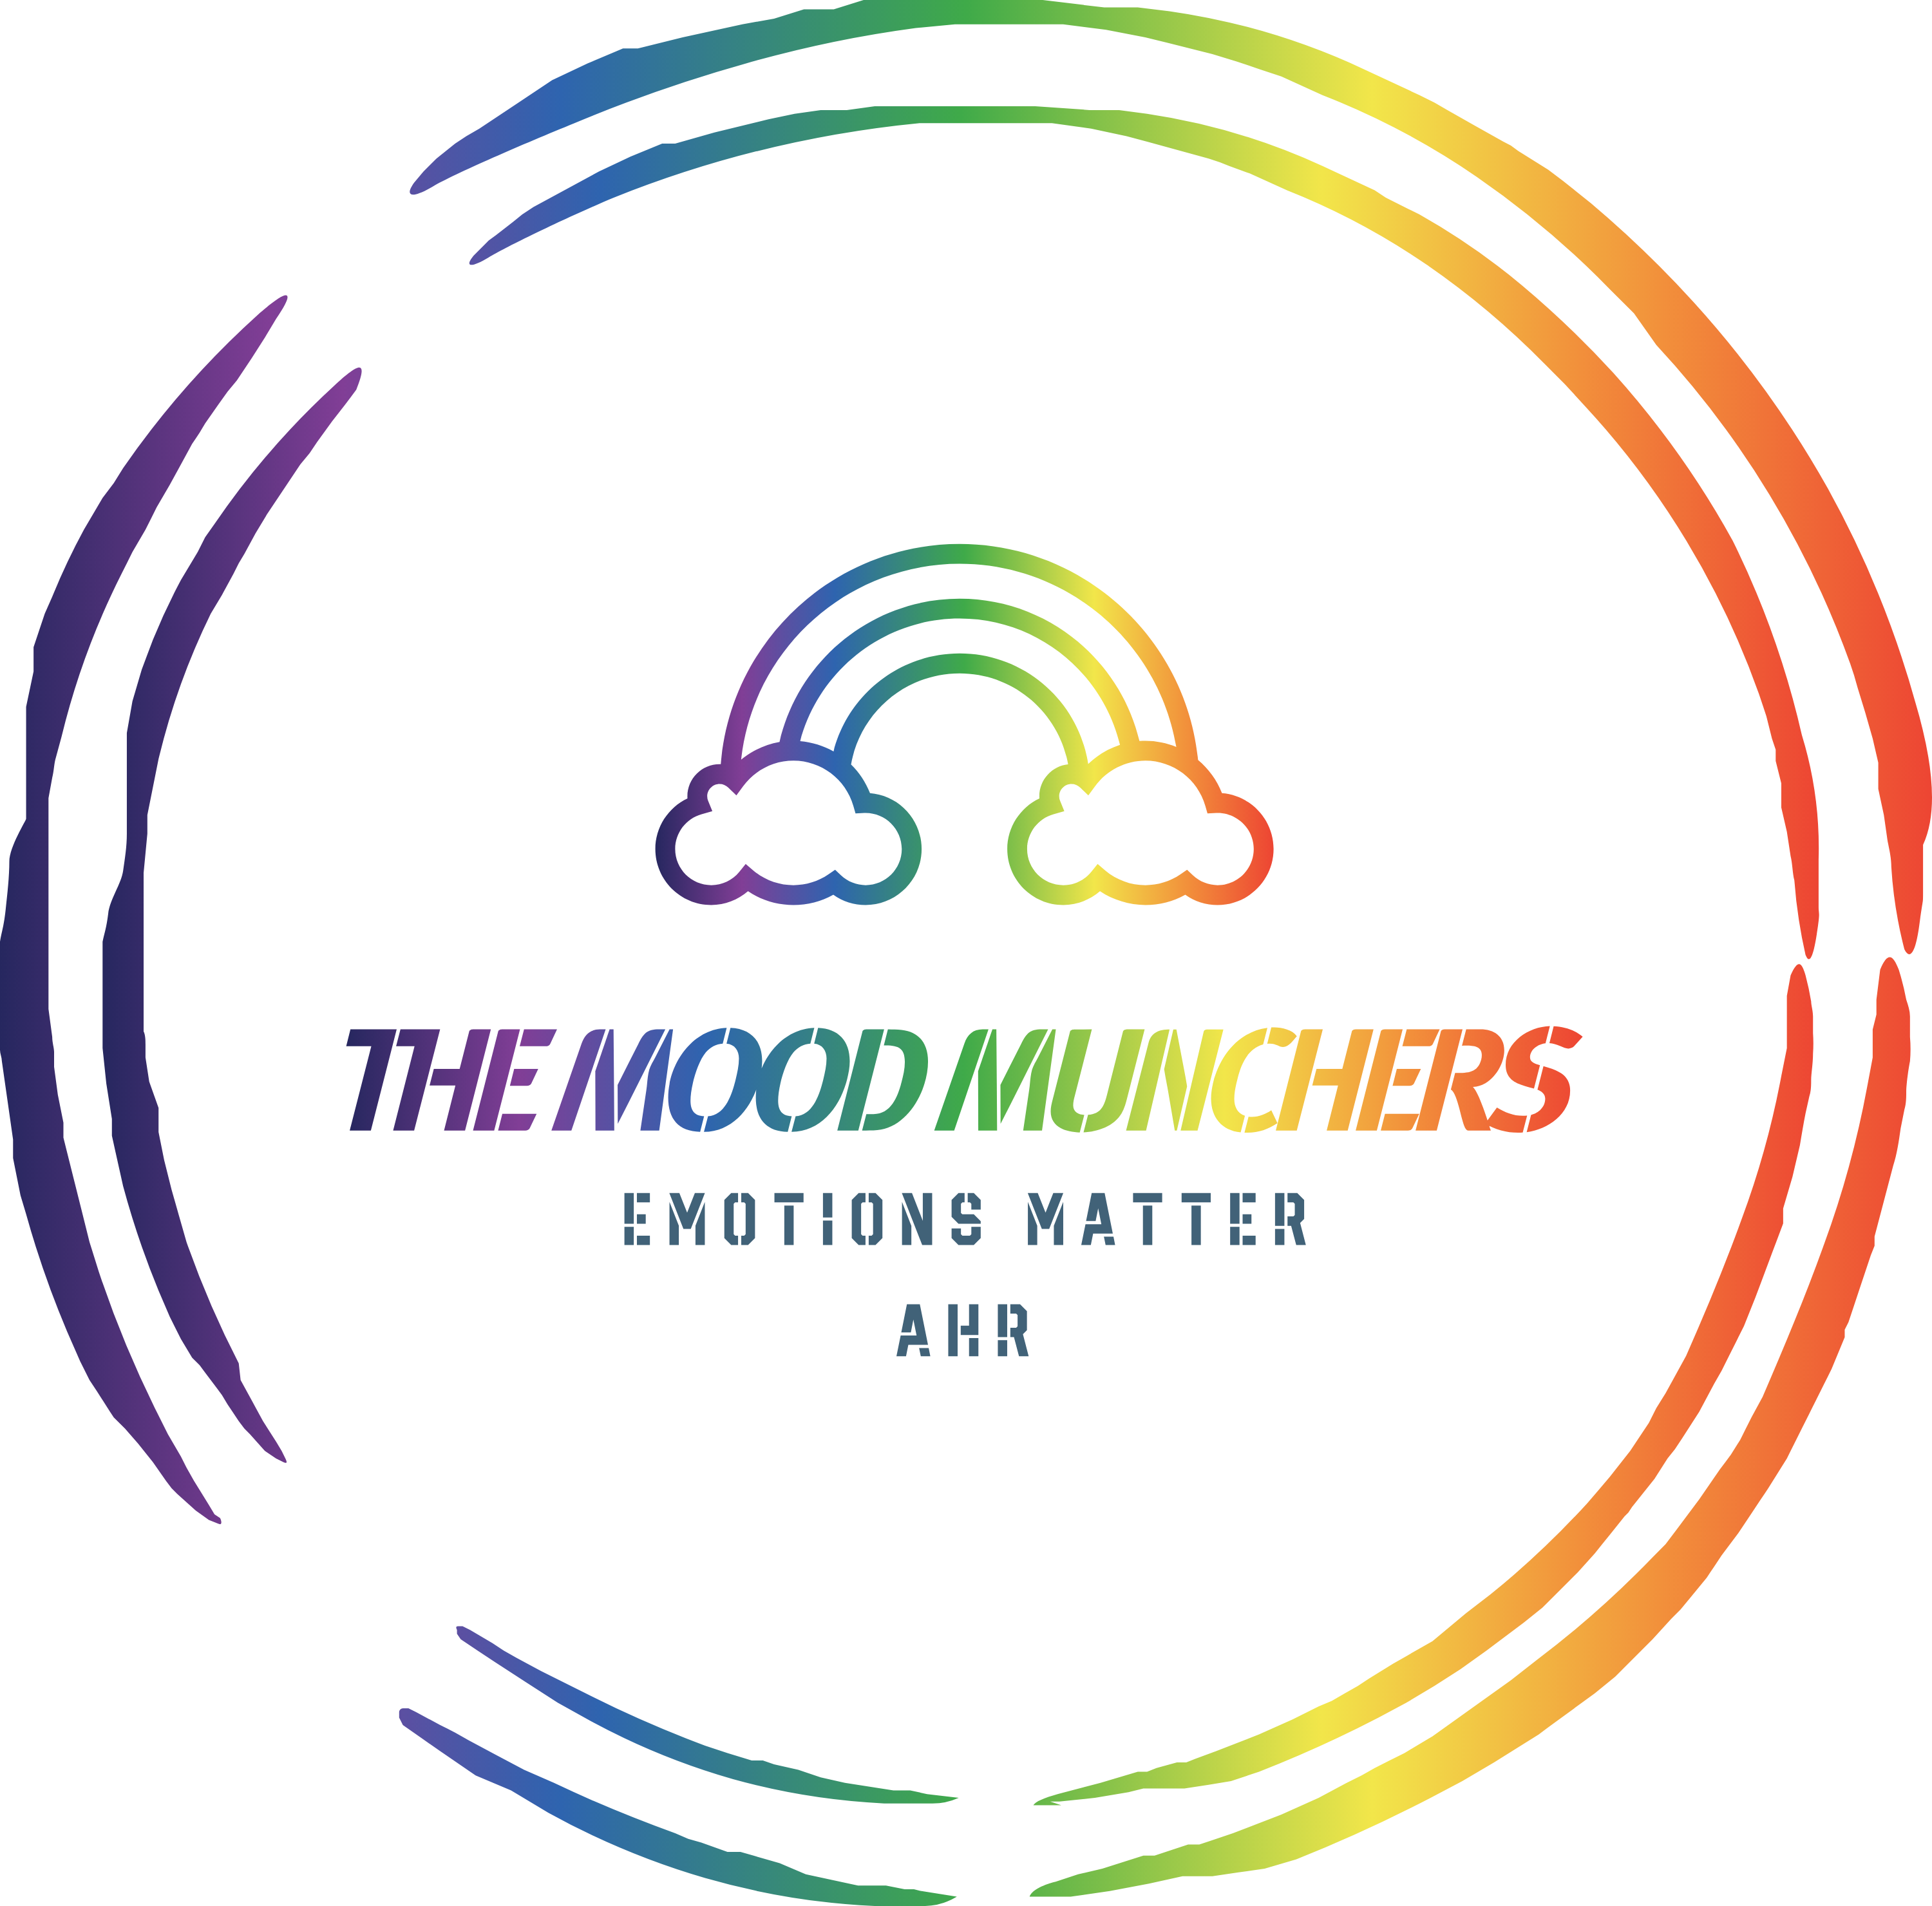 The Mood Munchers - Emotions Matter AHR